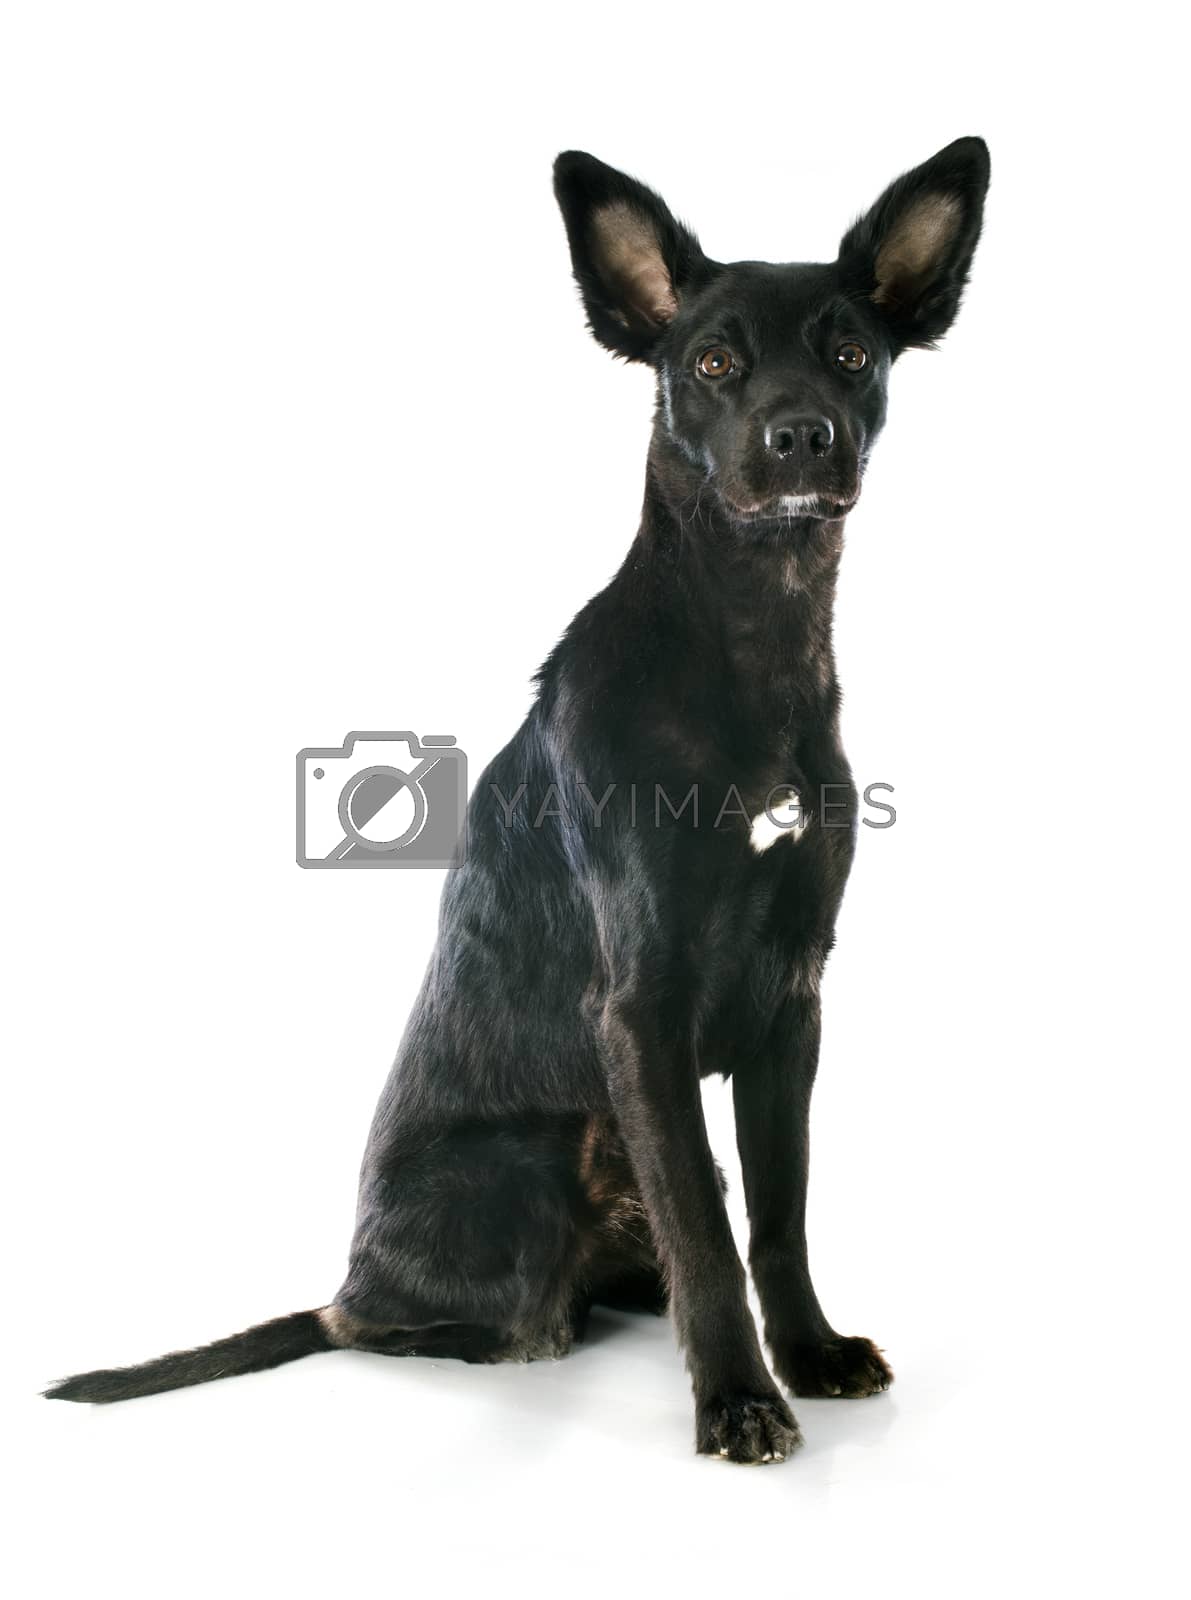 Royalty free image of peruvian dog by cynoclub